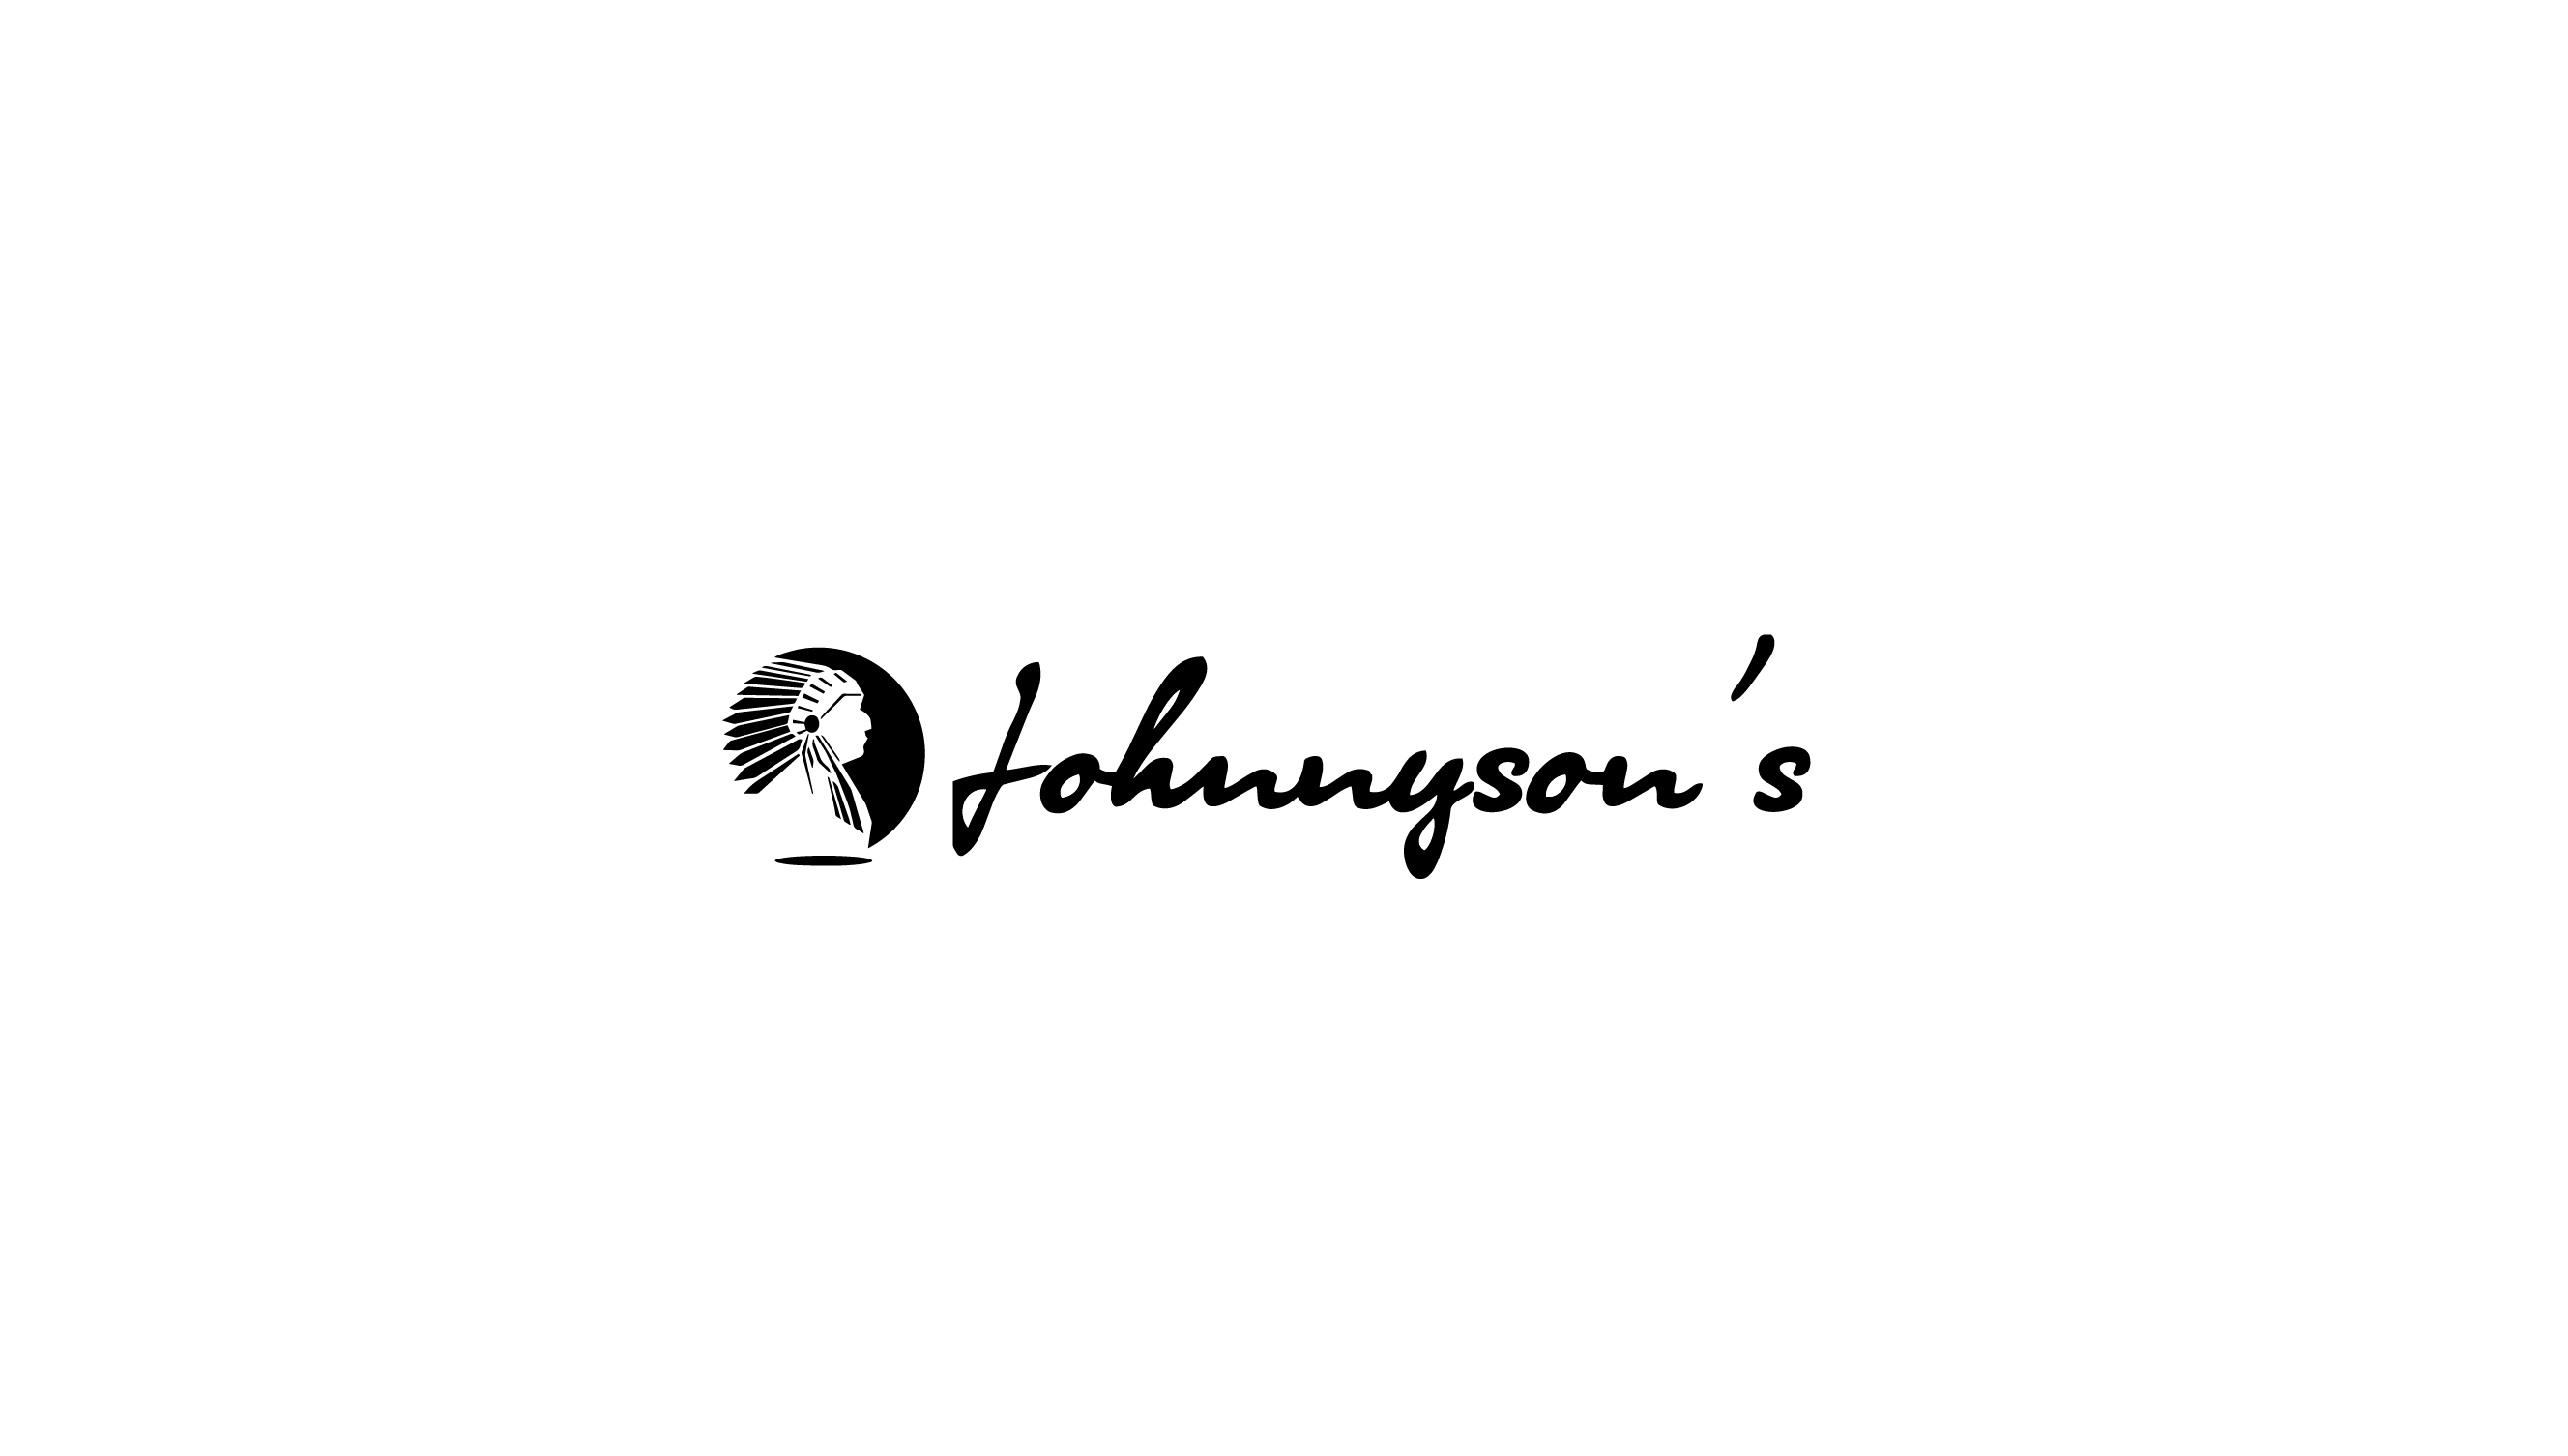 Johnnyson's